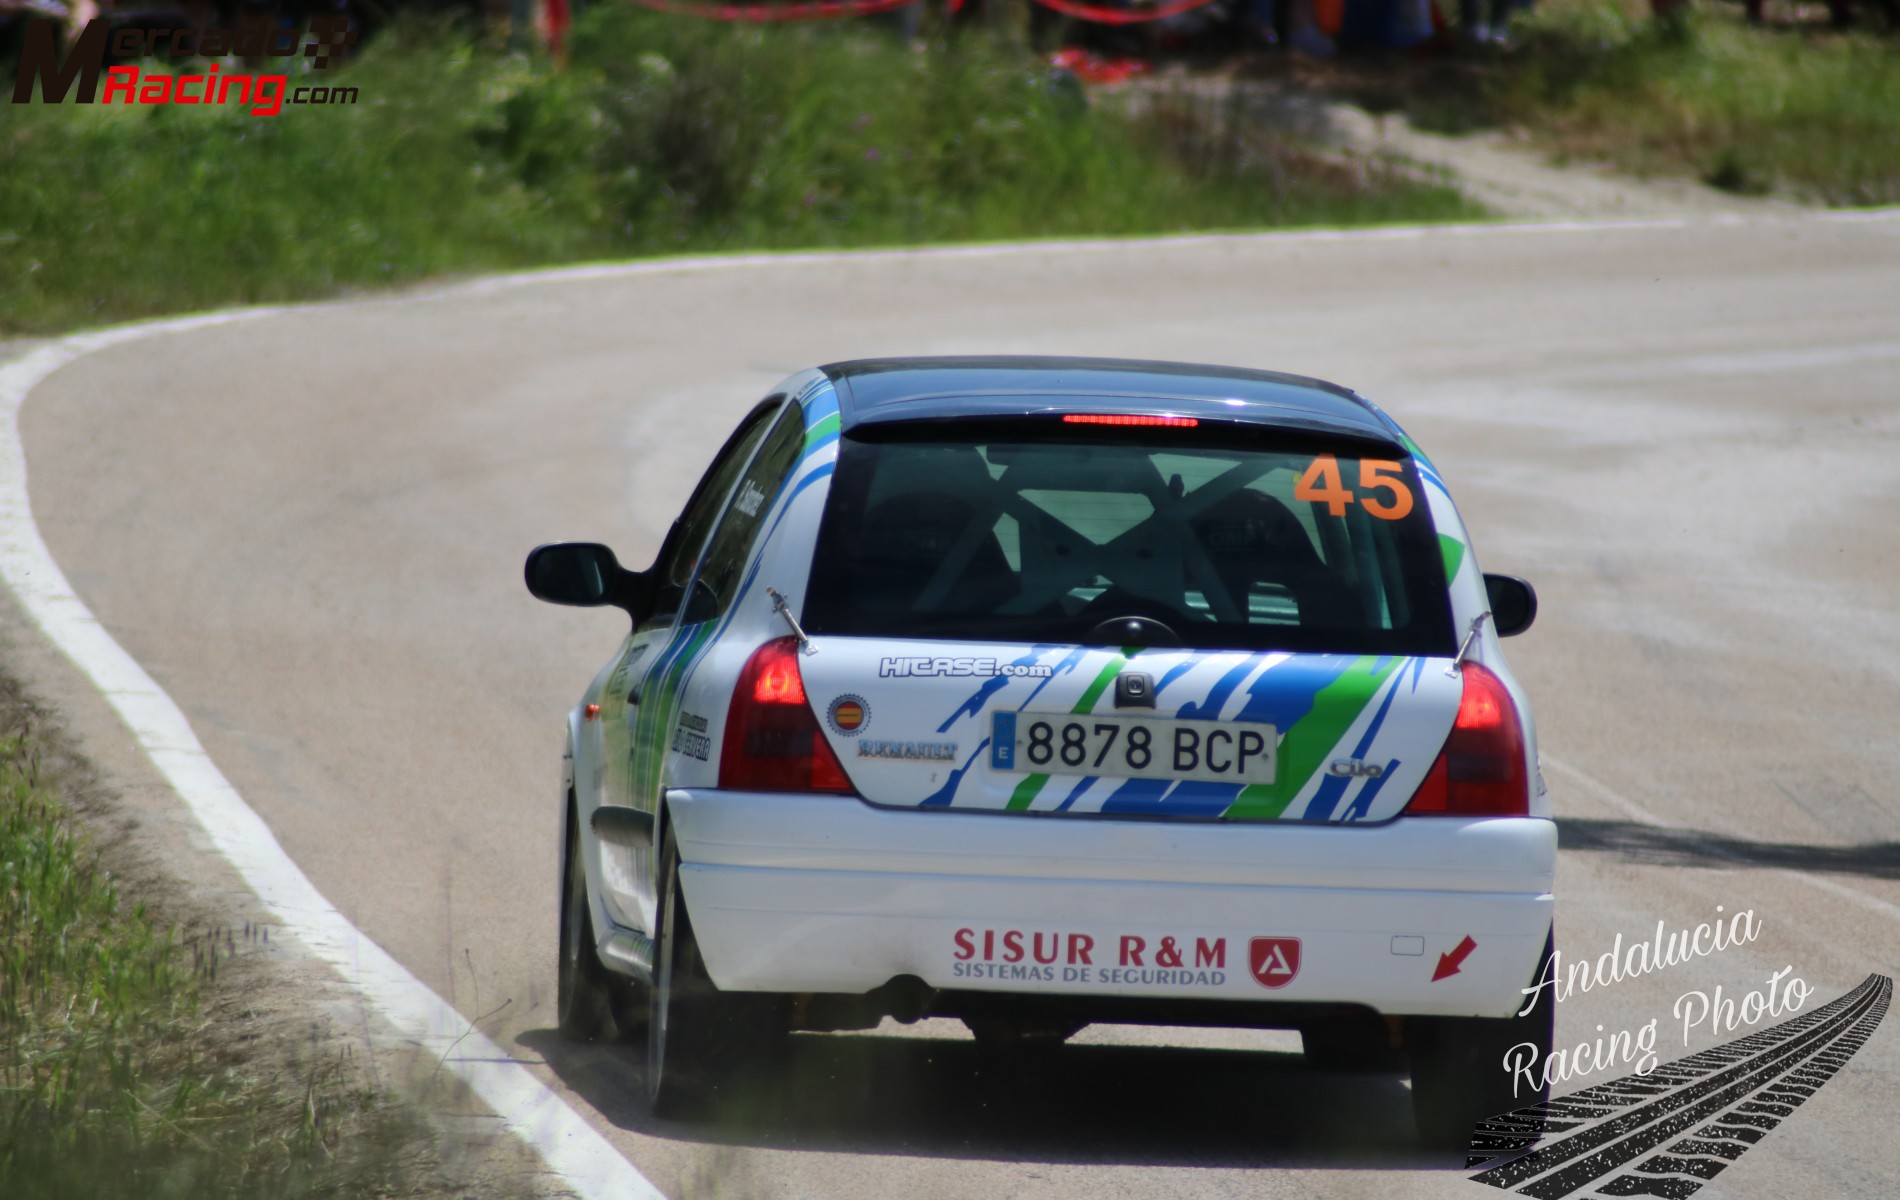 Clio sport rallys